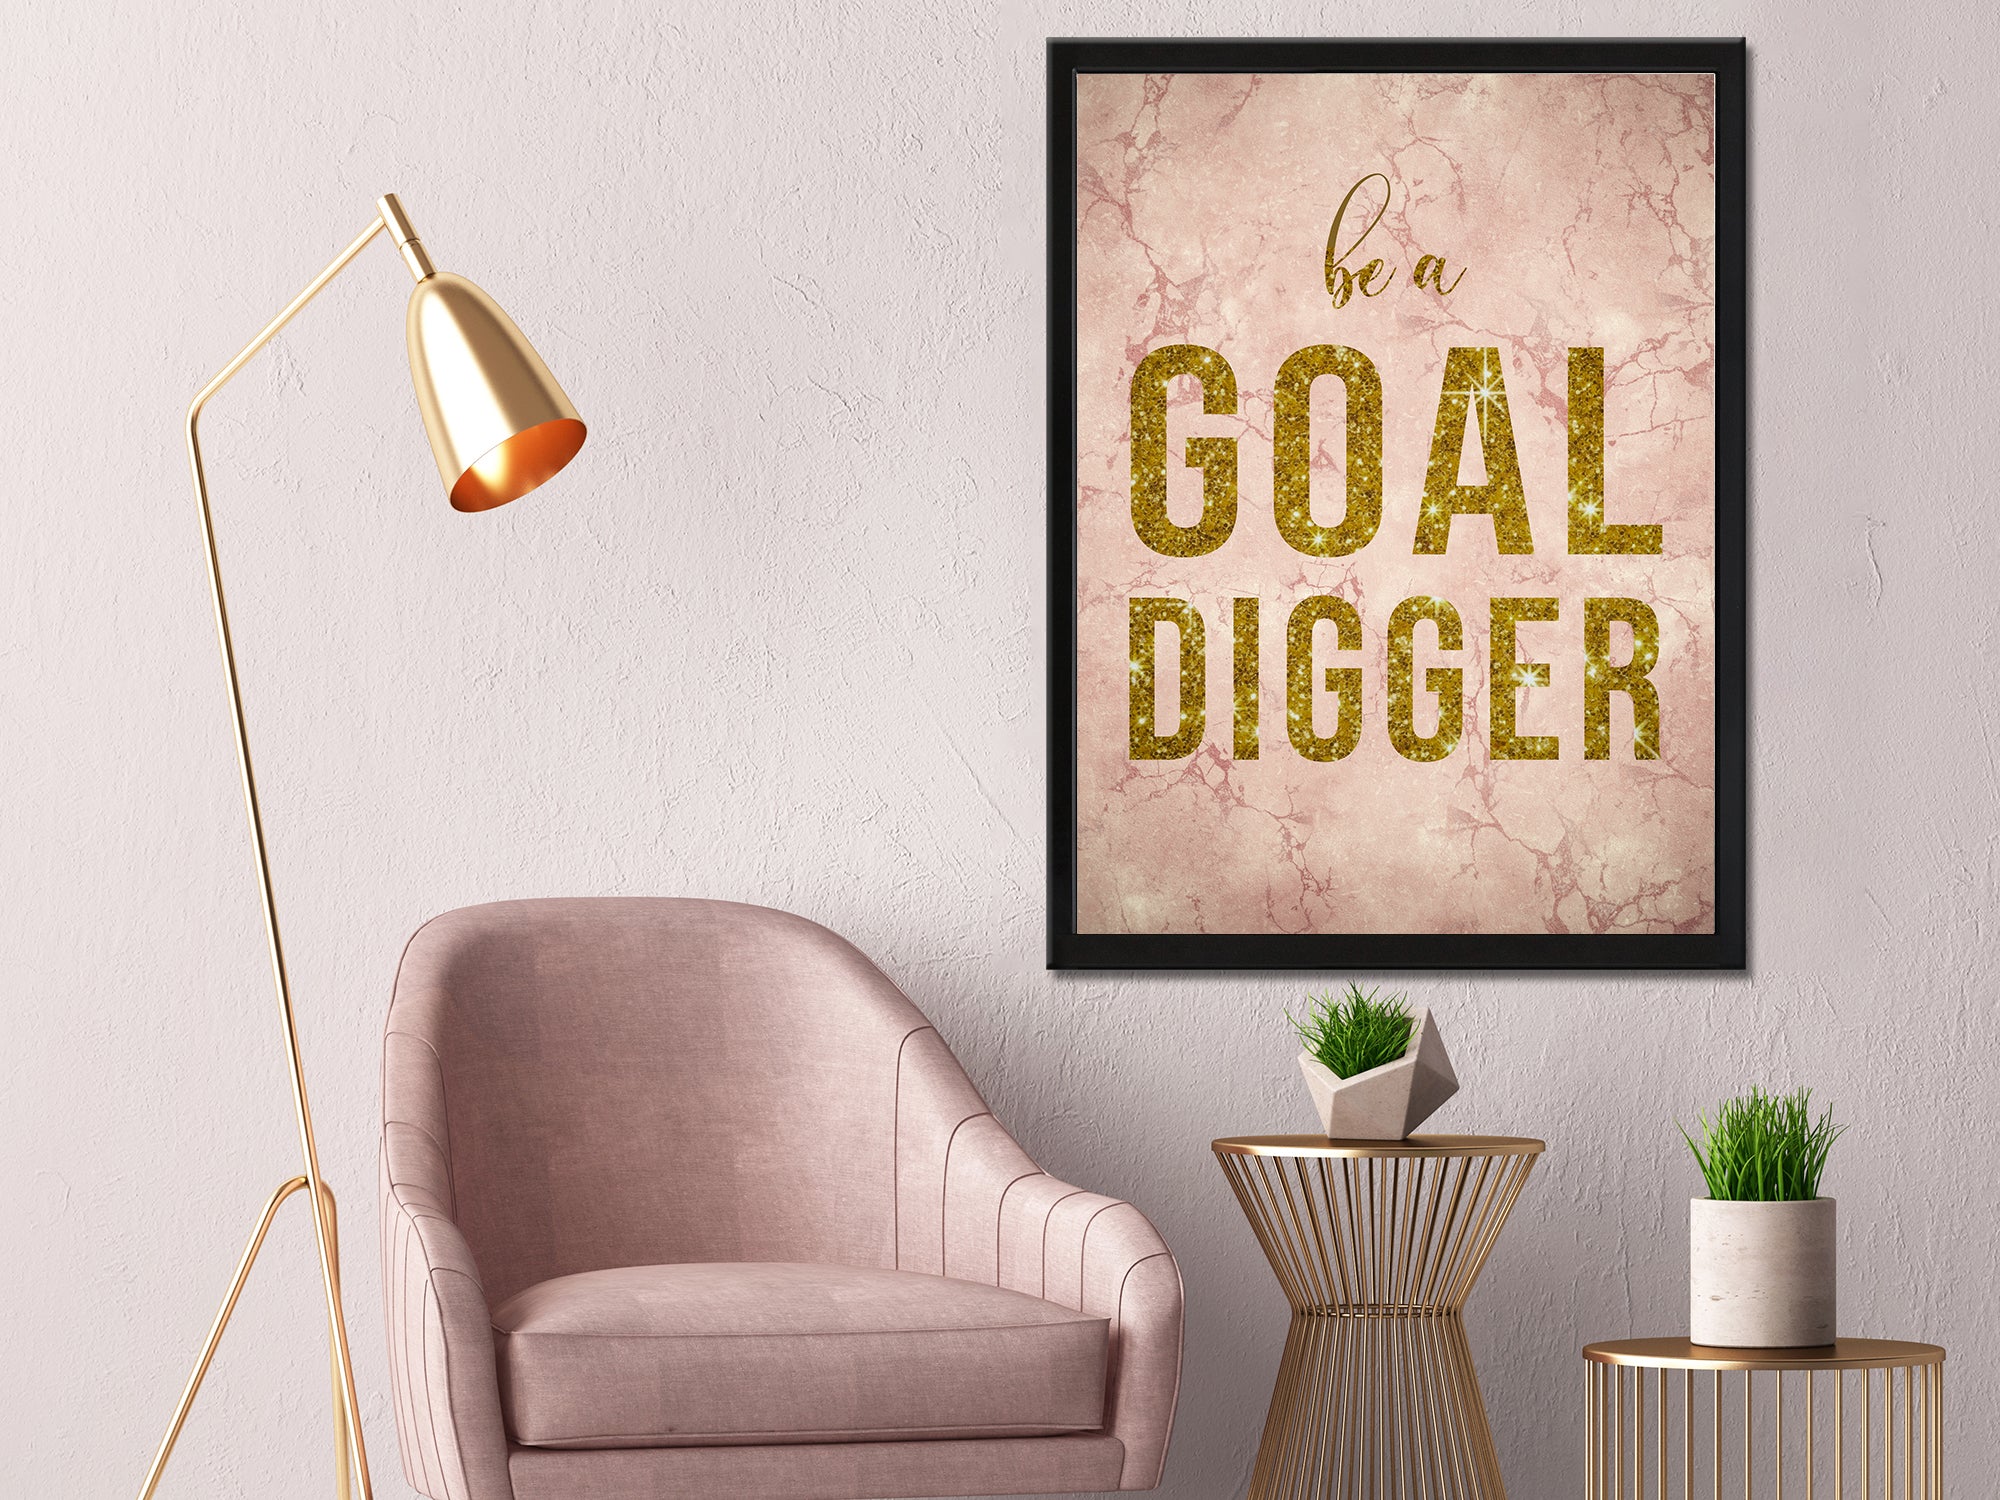 Be A Goal Digger - Canvas Wall Art